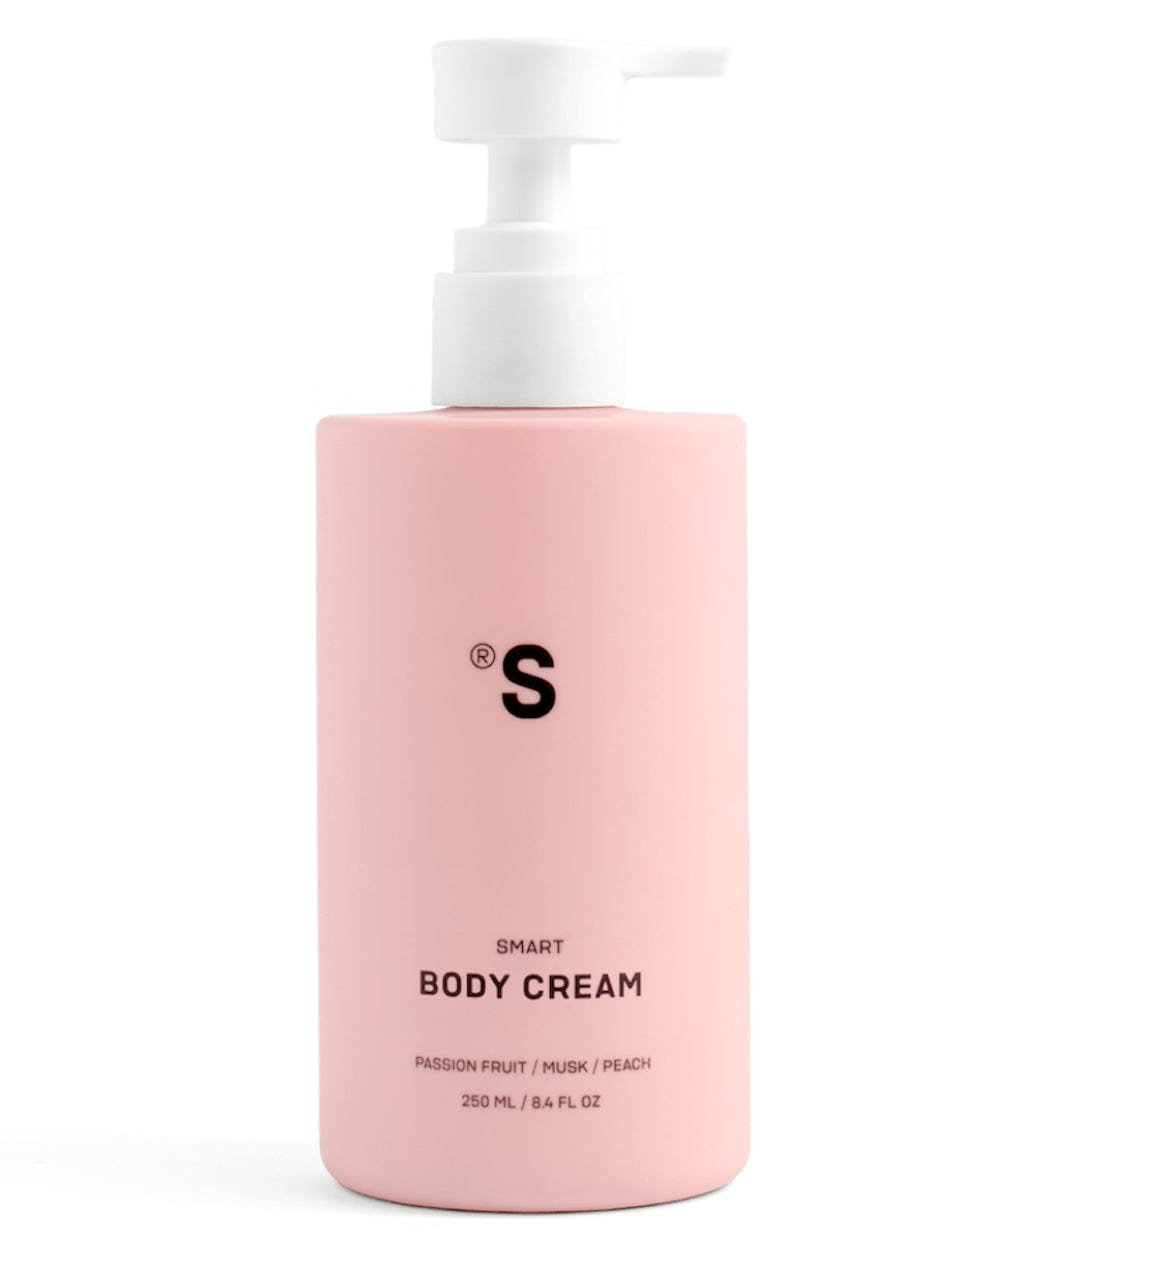 Smart body cream | passion fruit, musk, peach - Beauty Matters